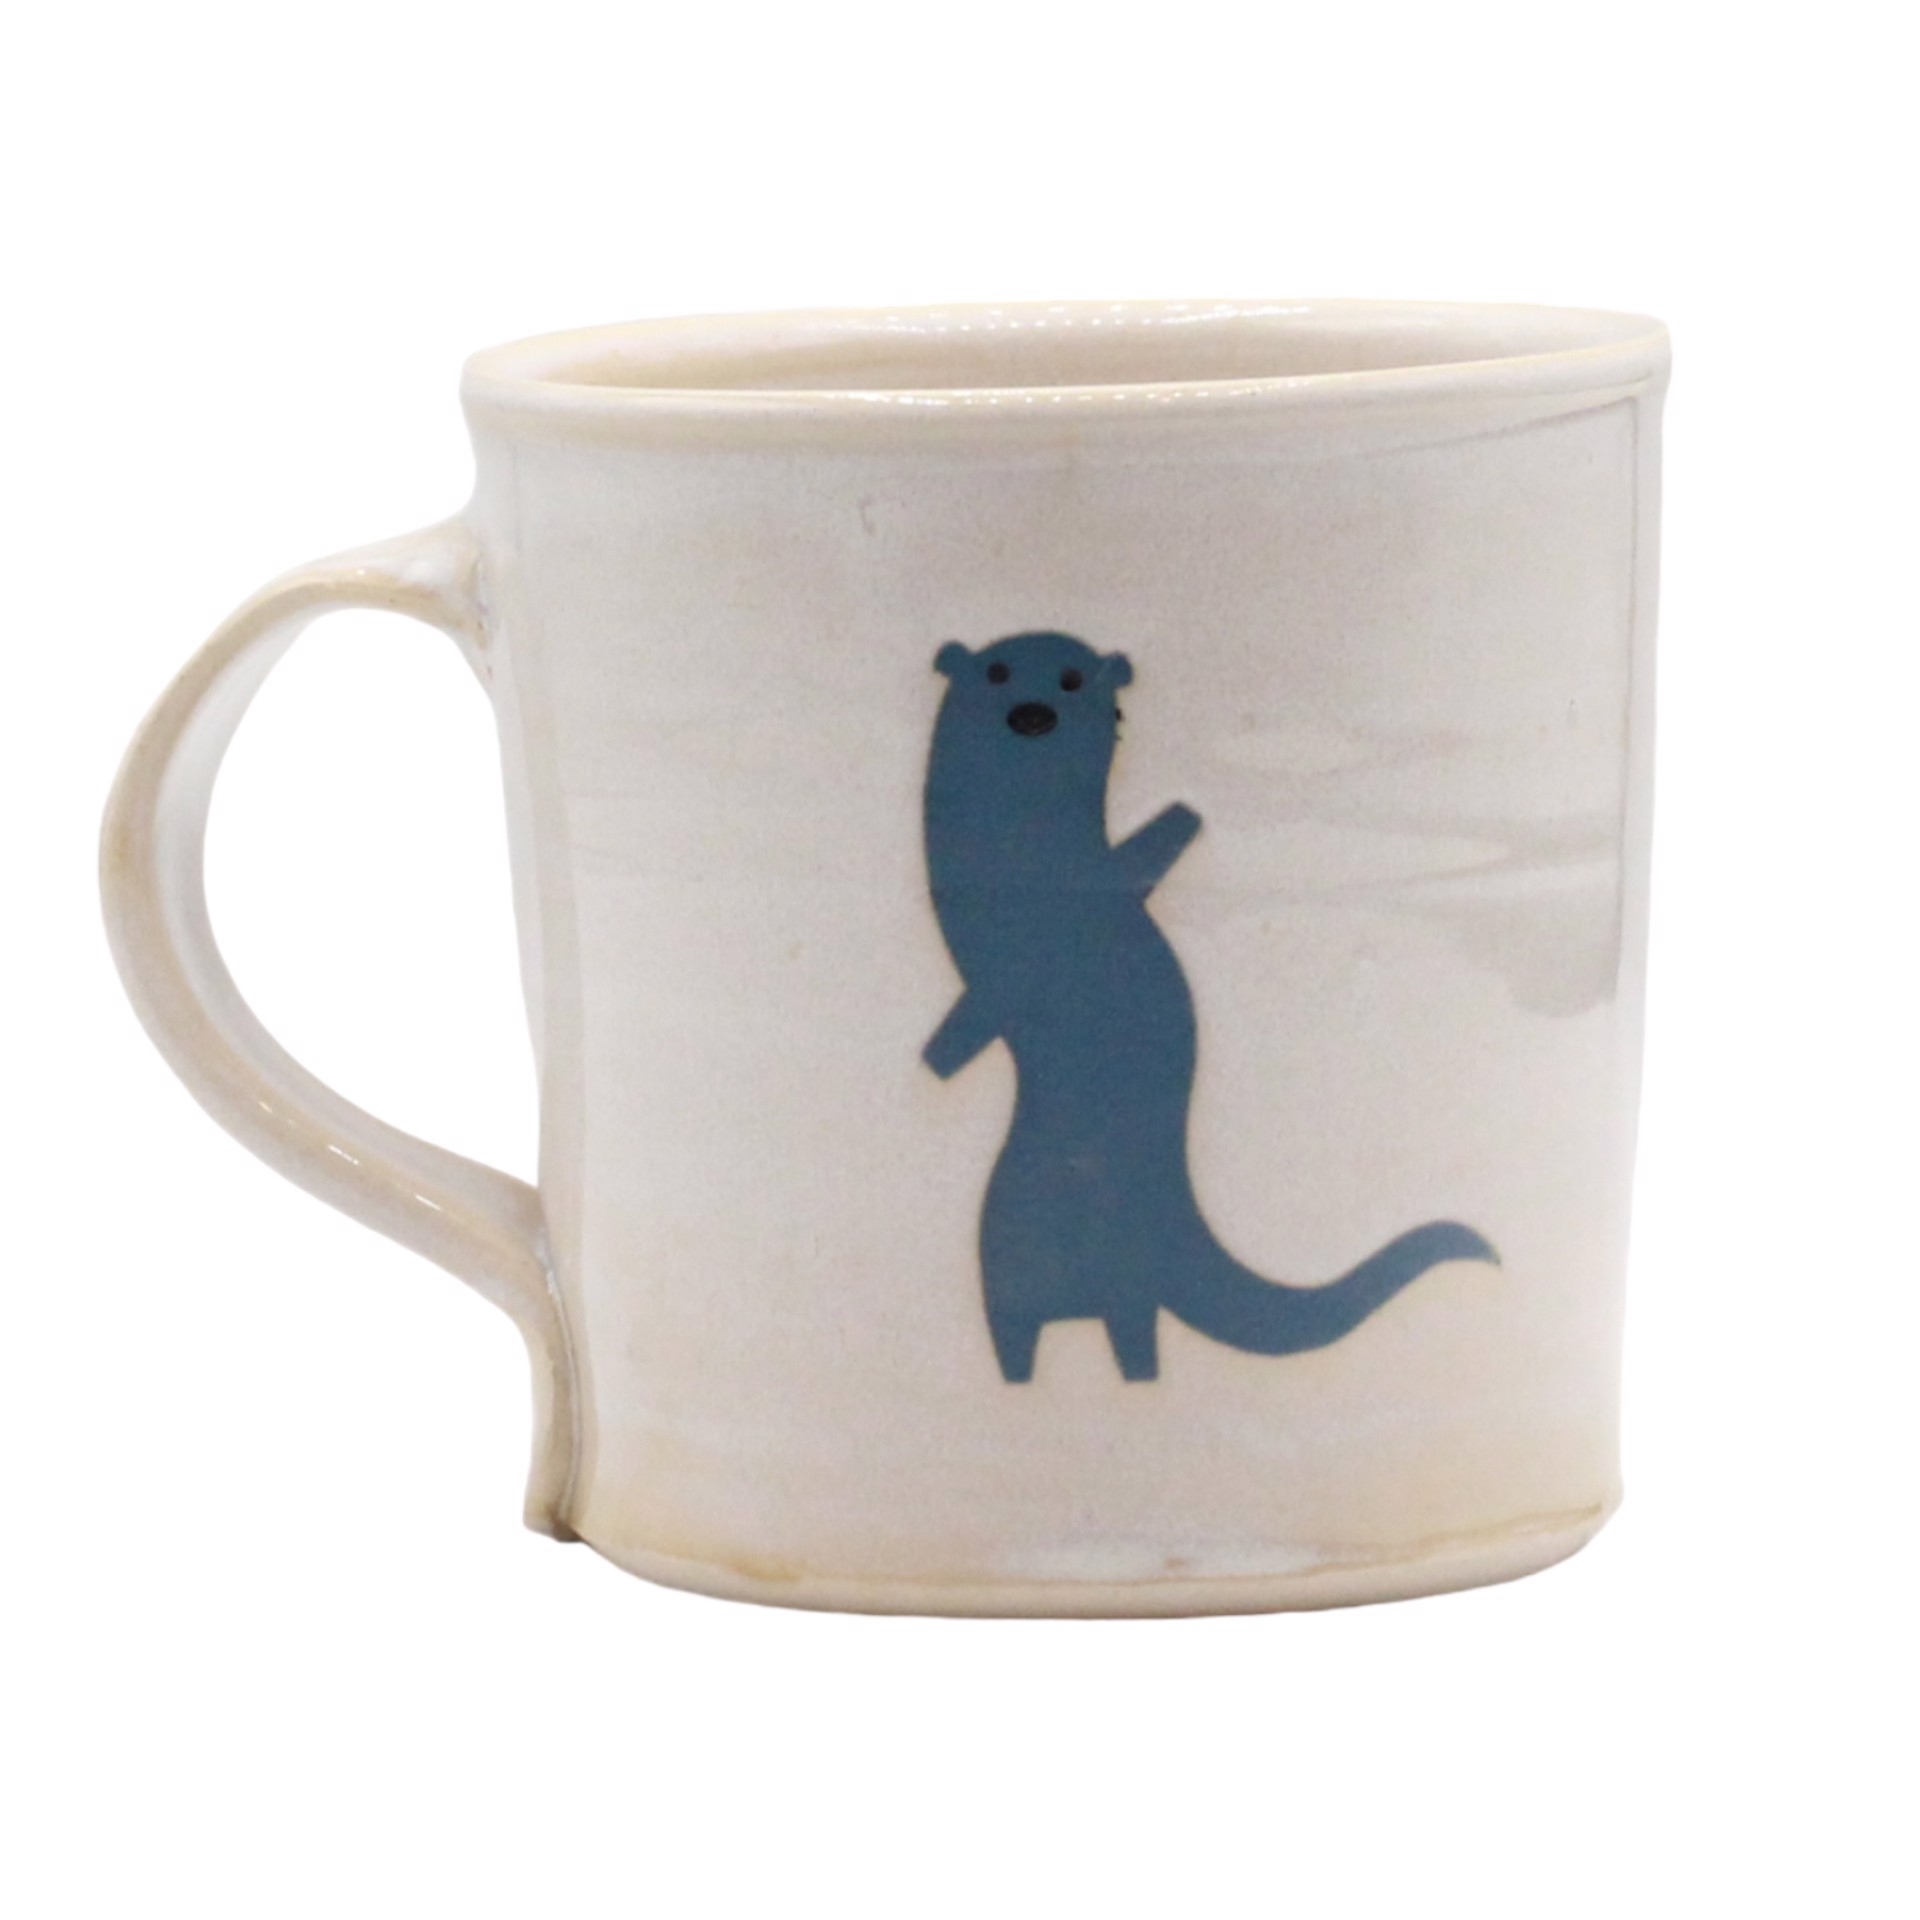 Olivia the Otter Mug by Stephen Mullins